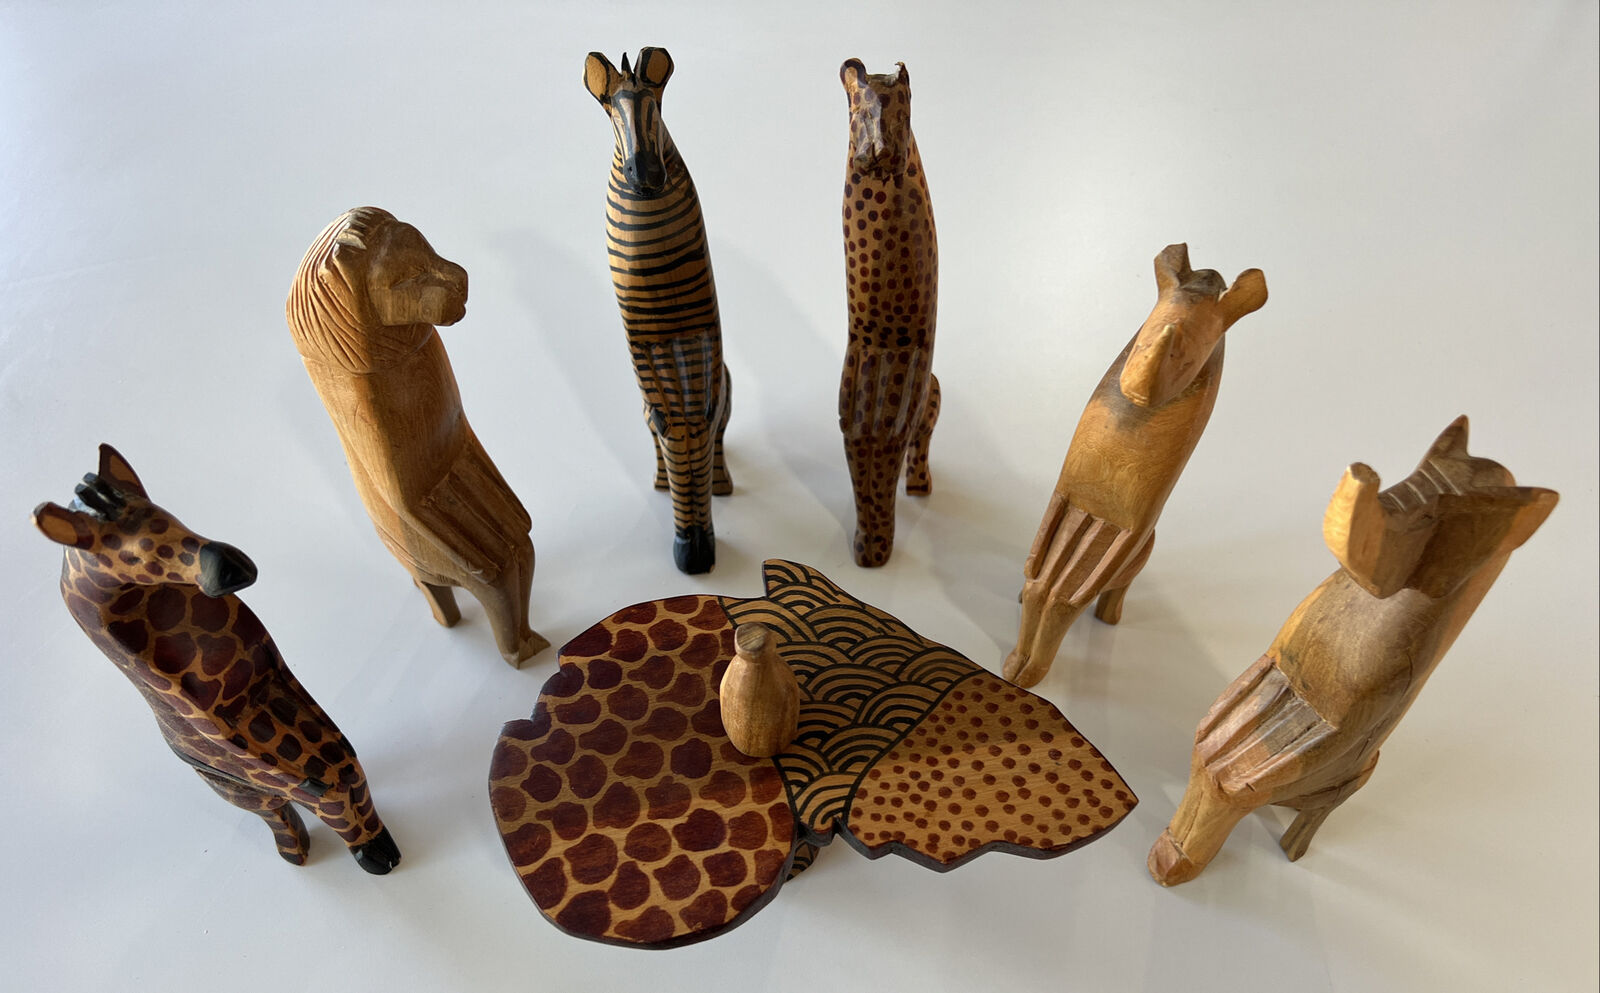 Kenya Artisan Hand-Carved Mahogany African Safari Animal Party Wood Figures